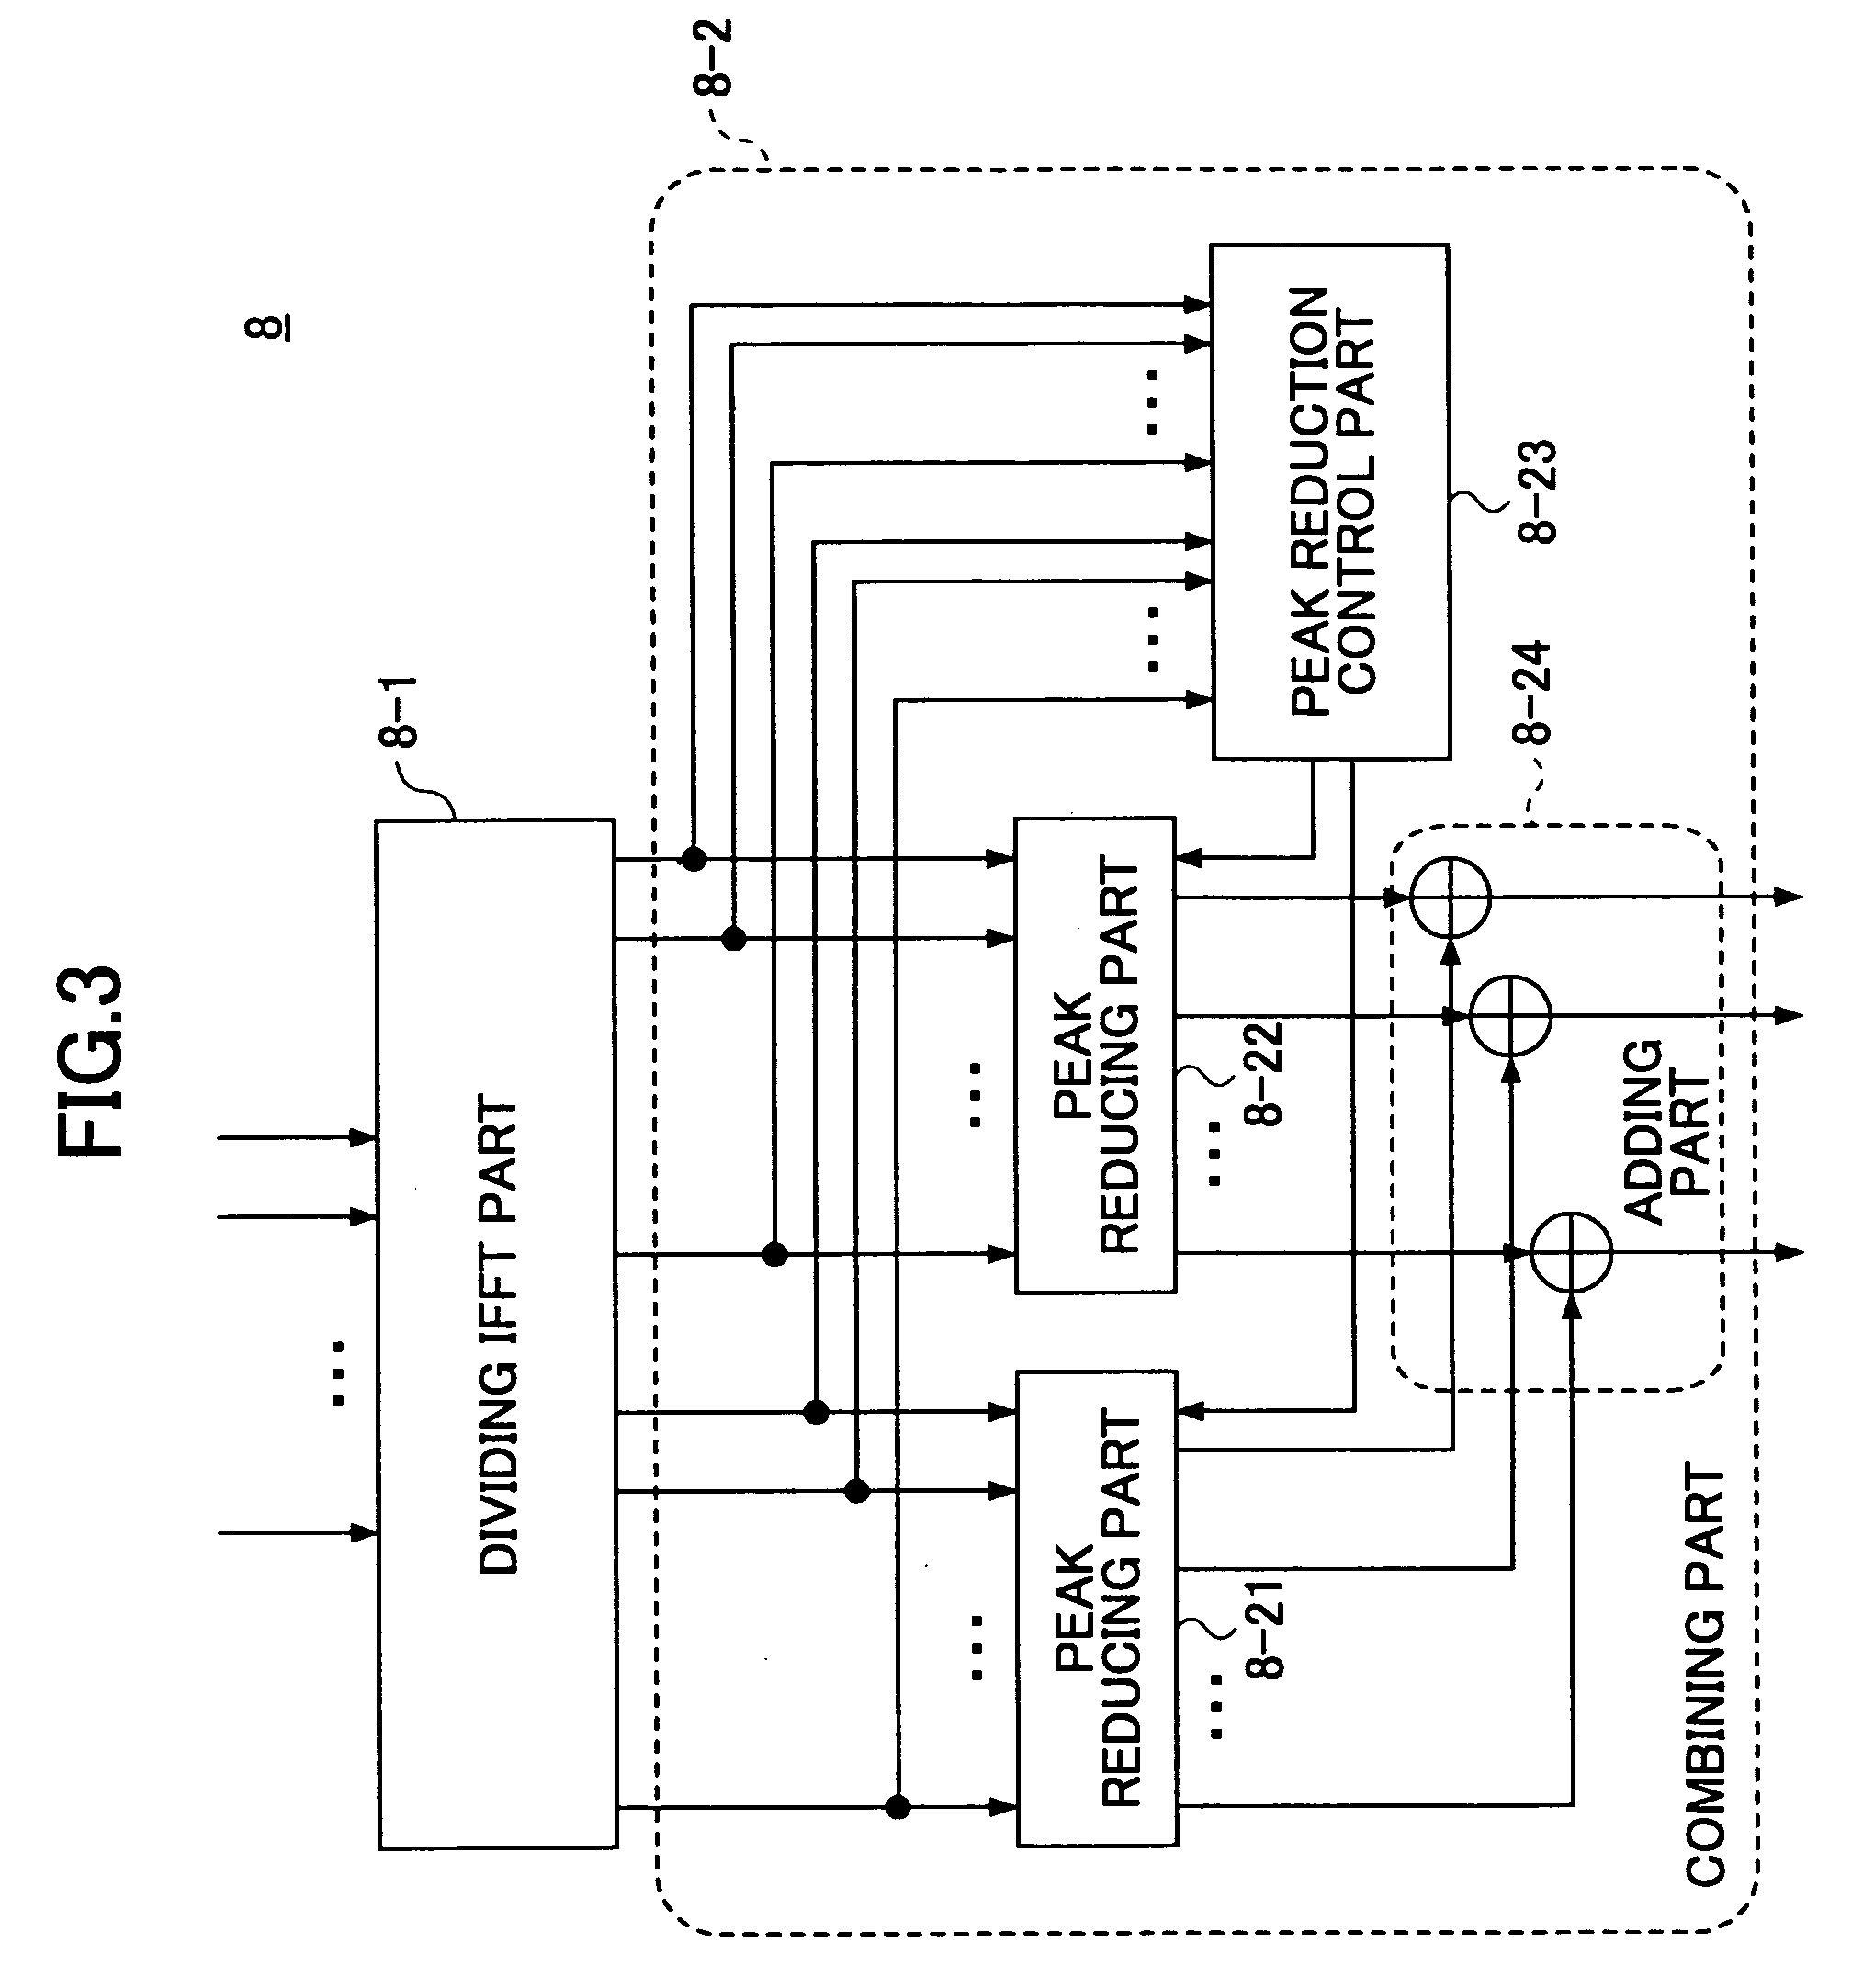 Transmitter and transmission control method